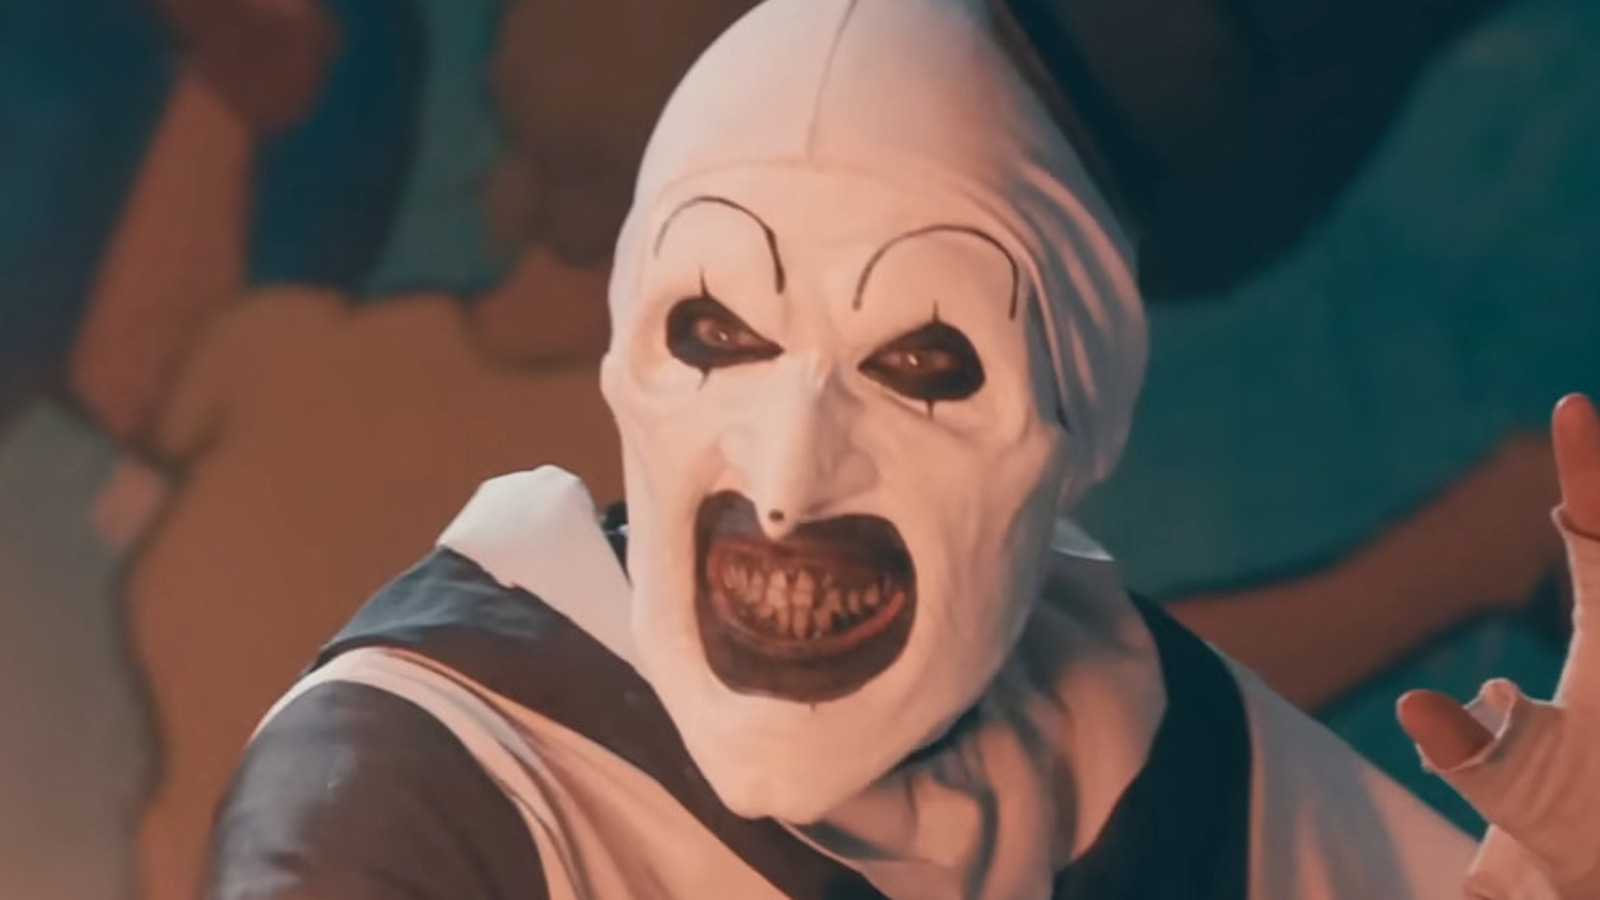 The Original Concept For Terrifier'S Art The Clown Was Outright Horrifying